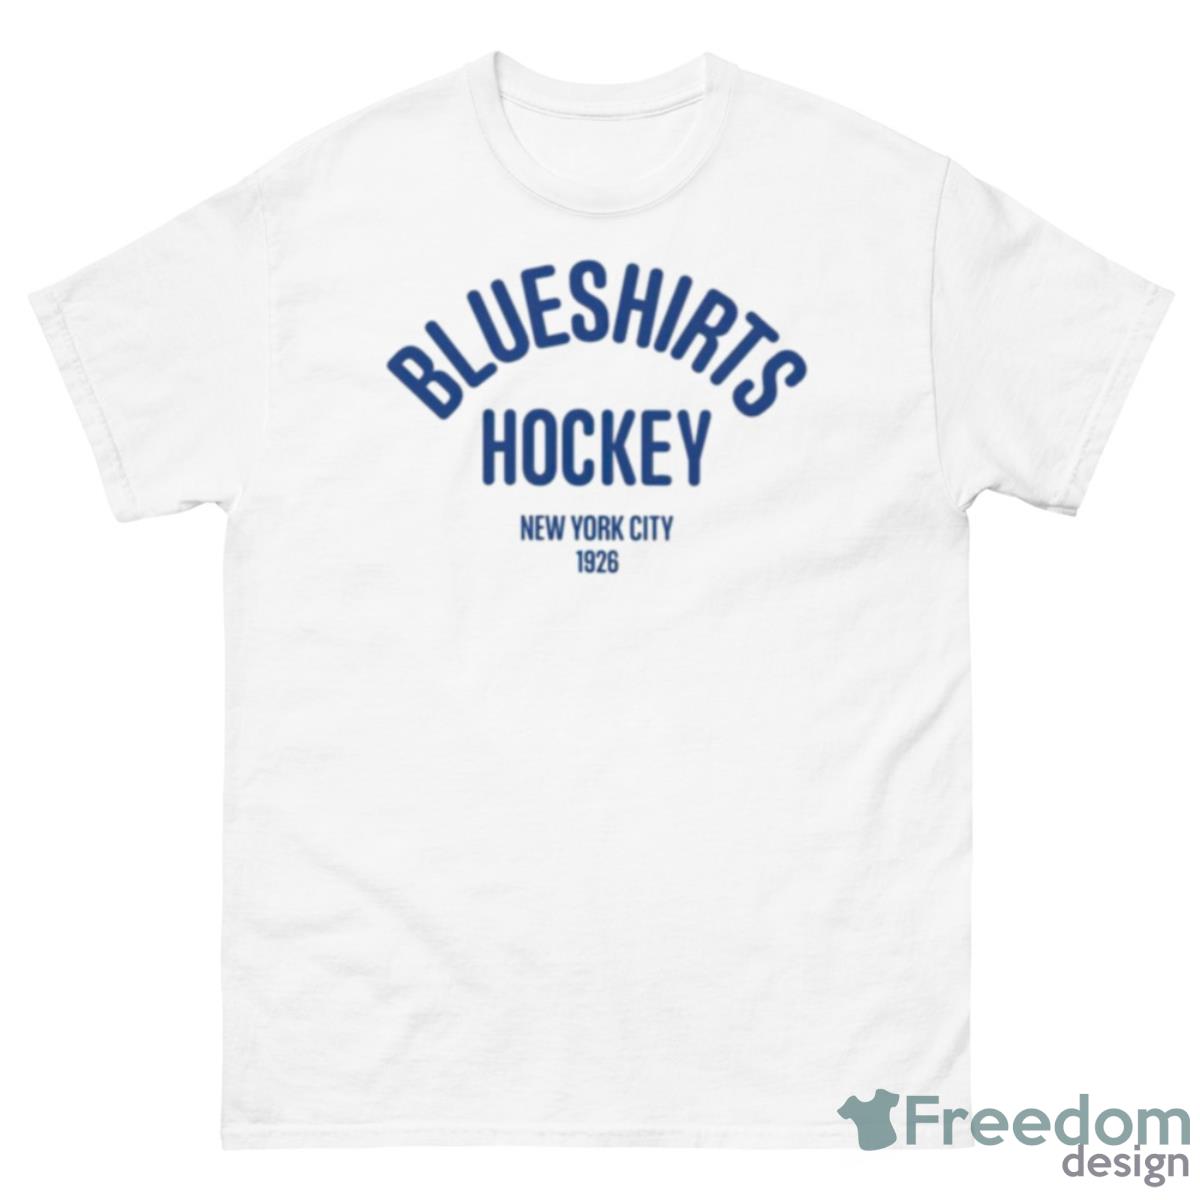 Blueshirts Hockey New York City 1926 Shirt - 500 Men’s Classic Tee Gildan